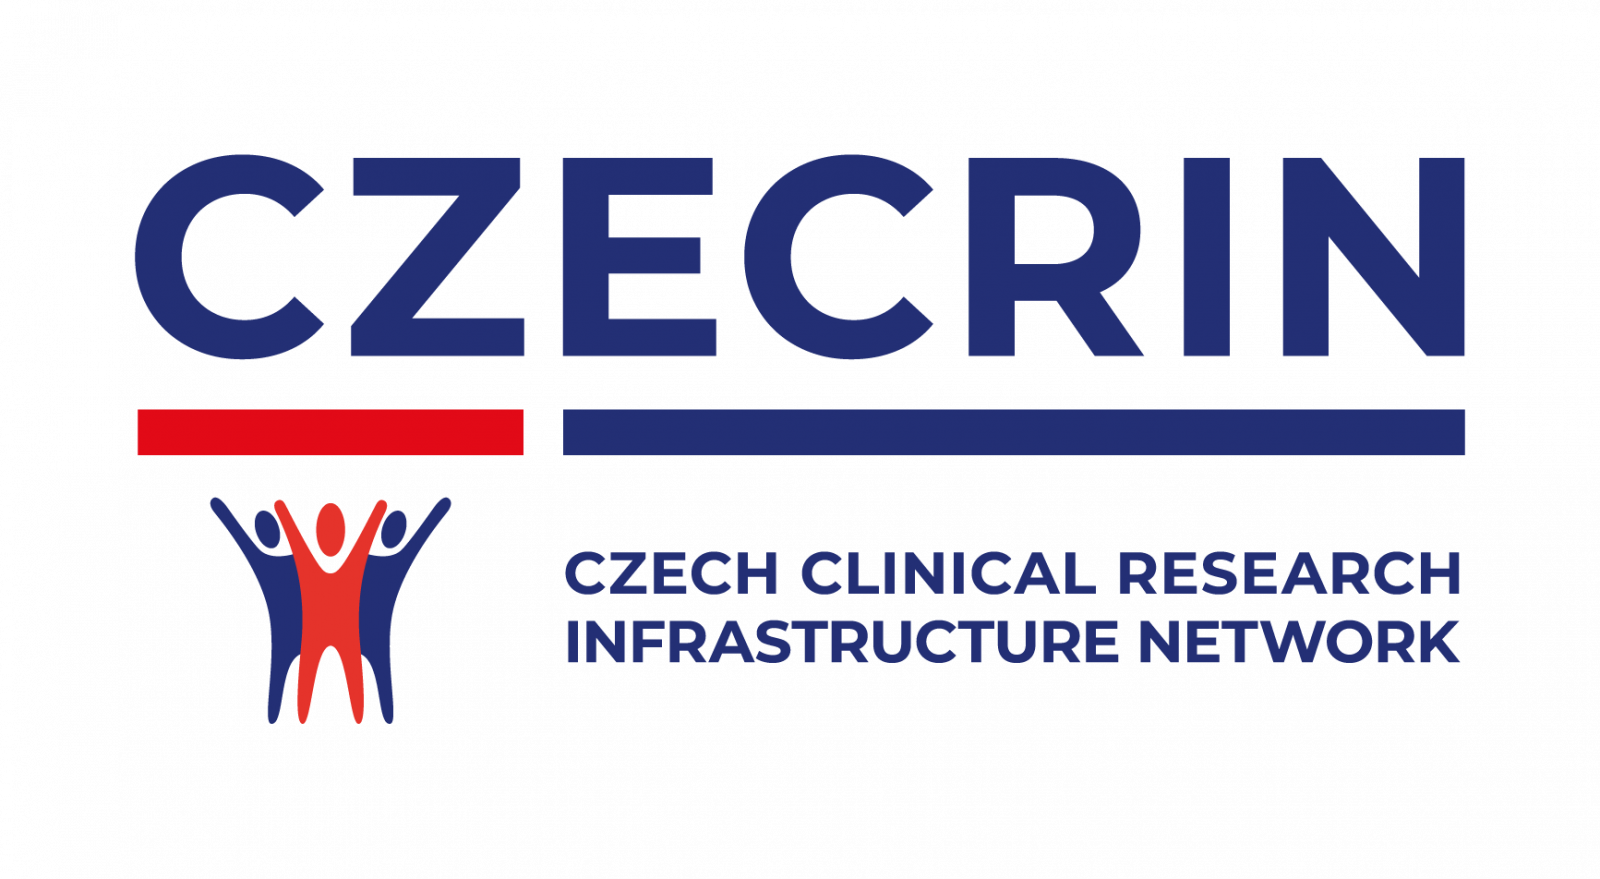 Czech Clinical Research Infrastructure Network